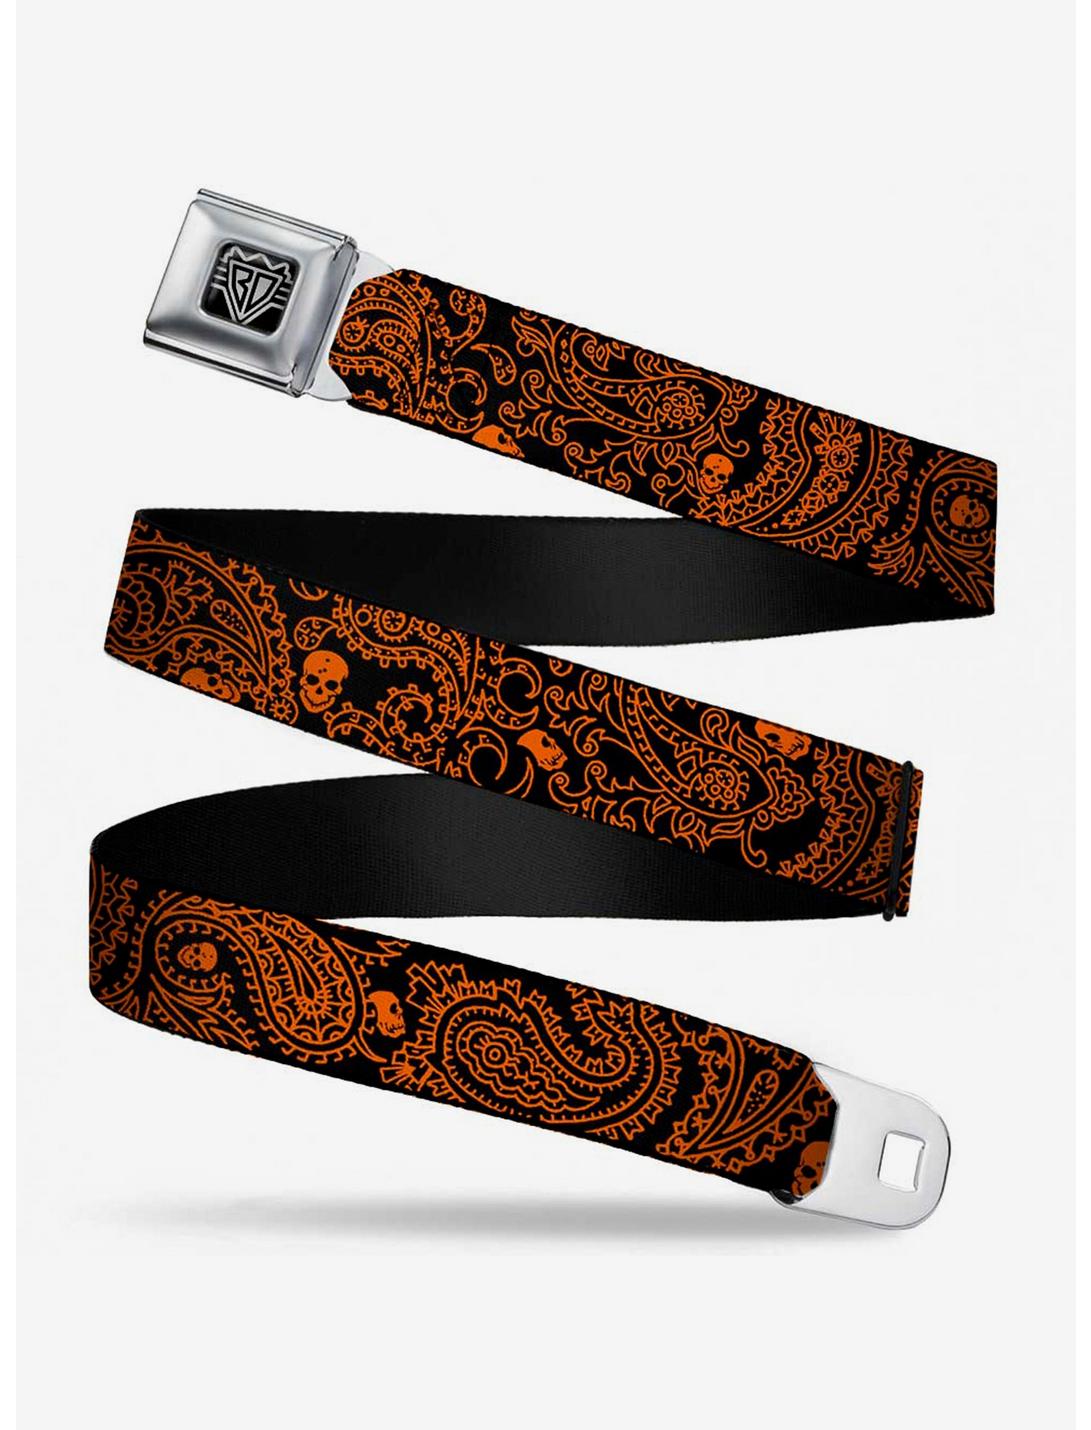 Bandana Skull Print Seatbelt Belt Black Orange, ORANGE, hi-res